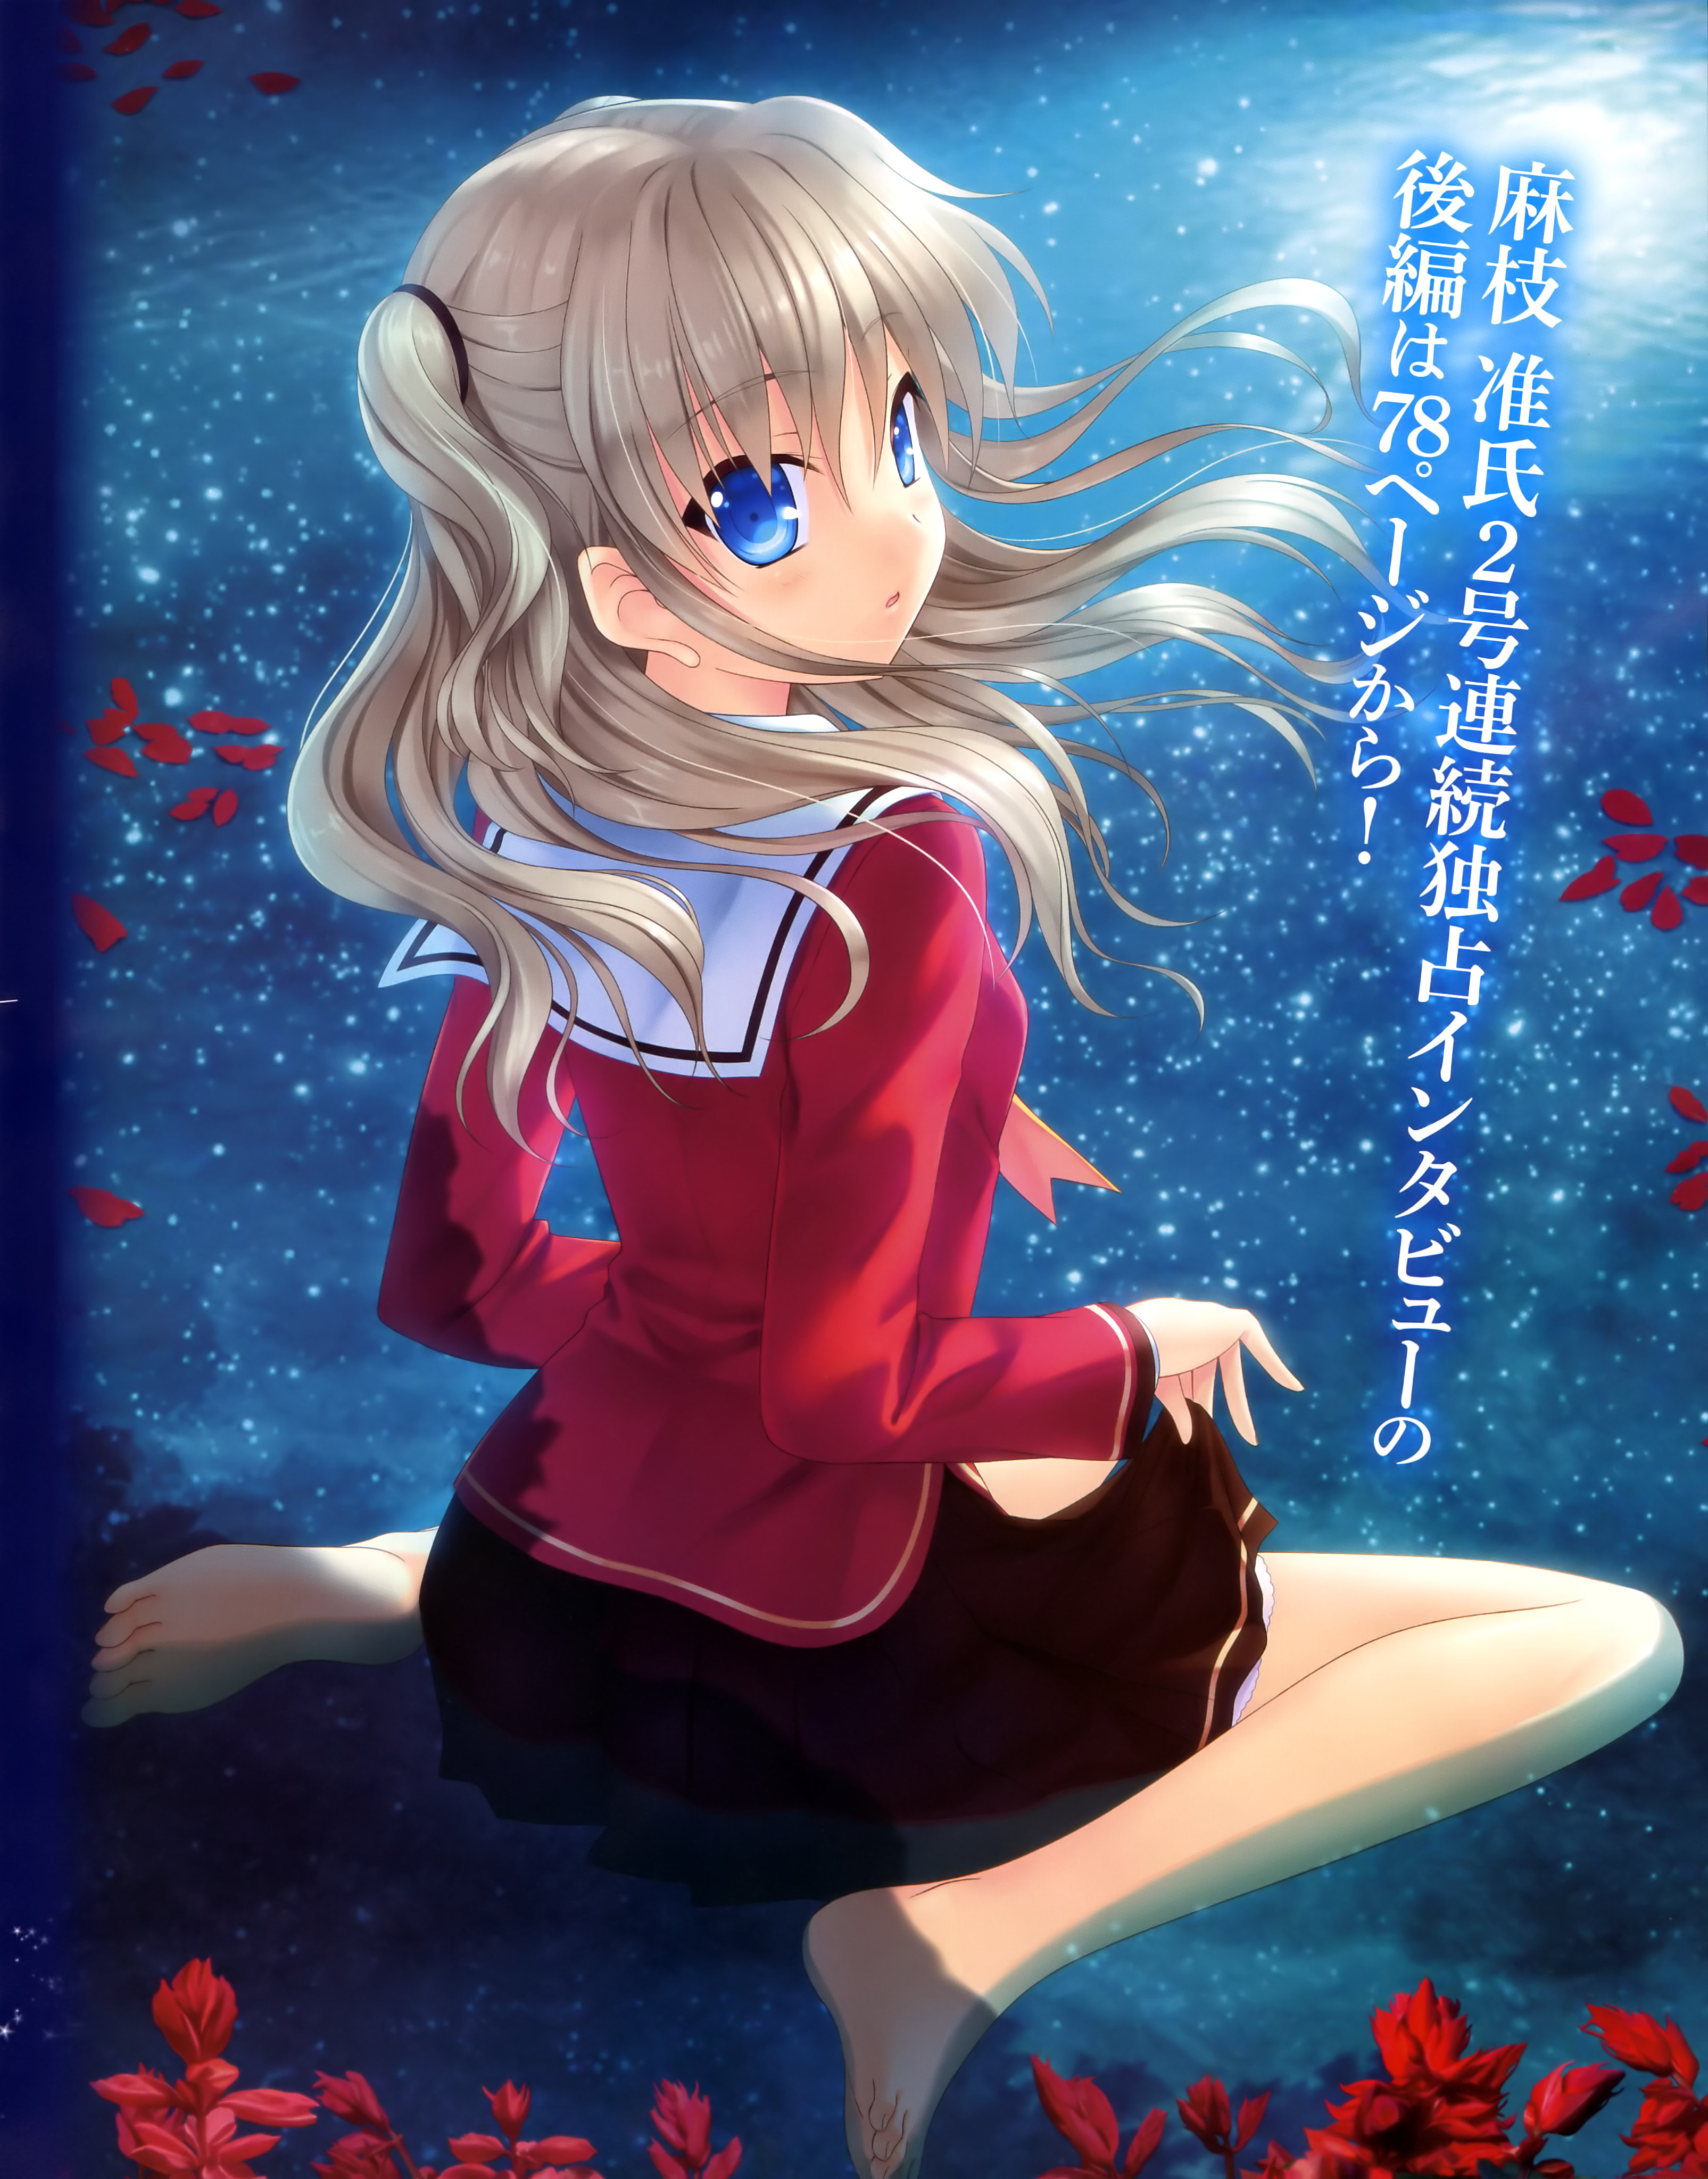 Tomori Nao (Series) Anime Image Board